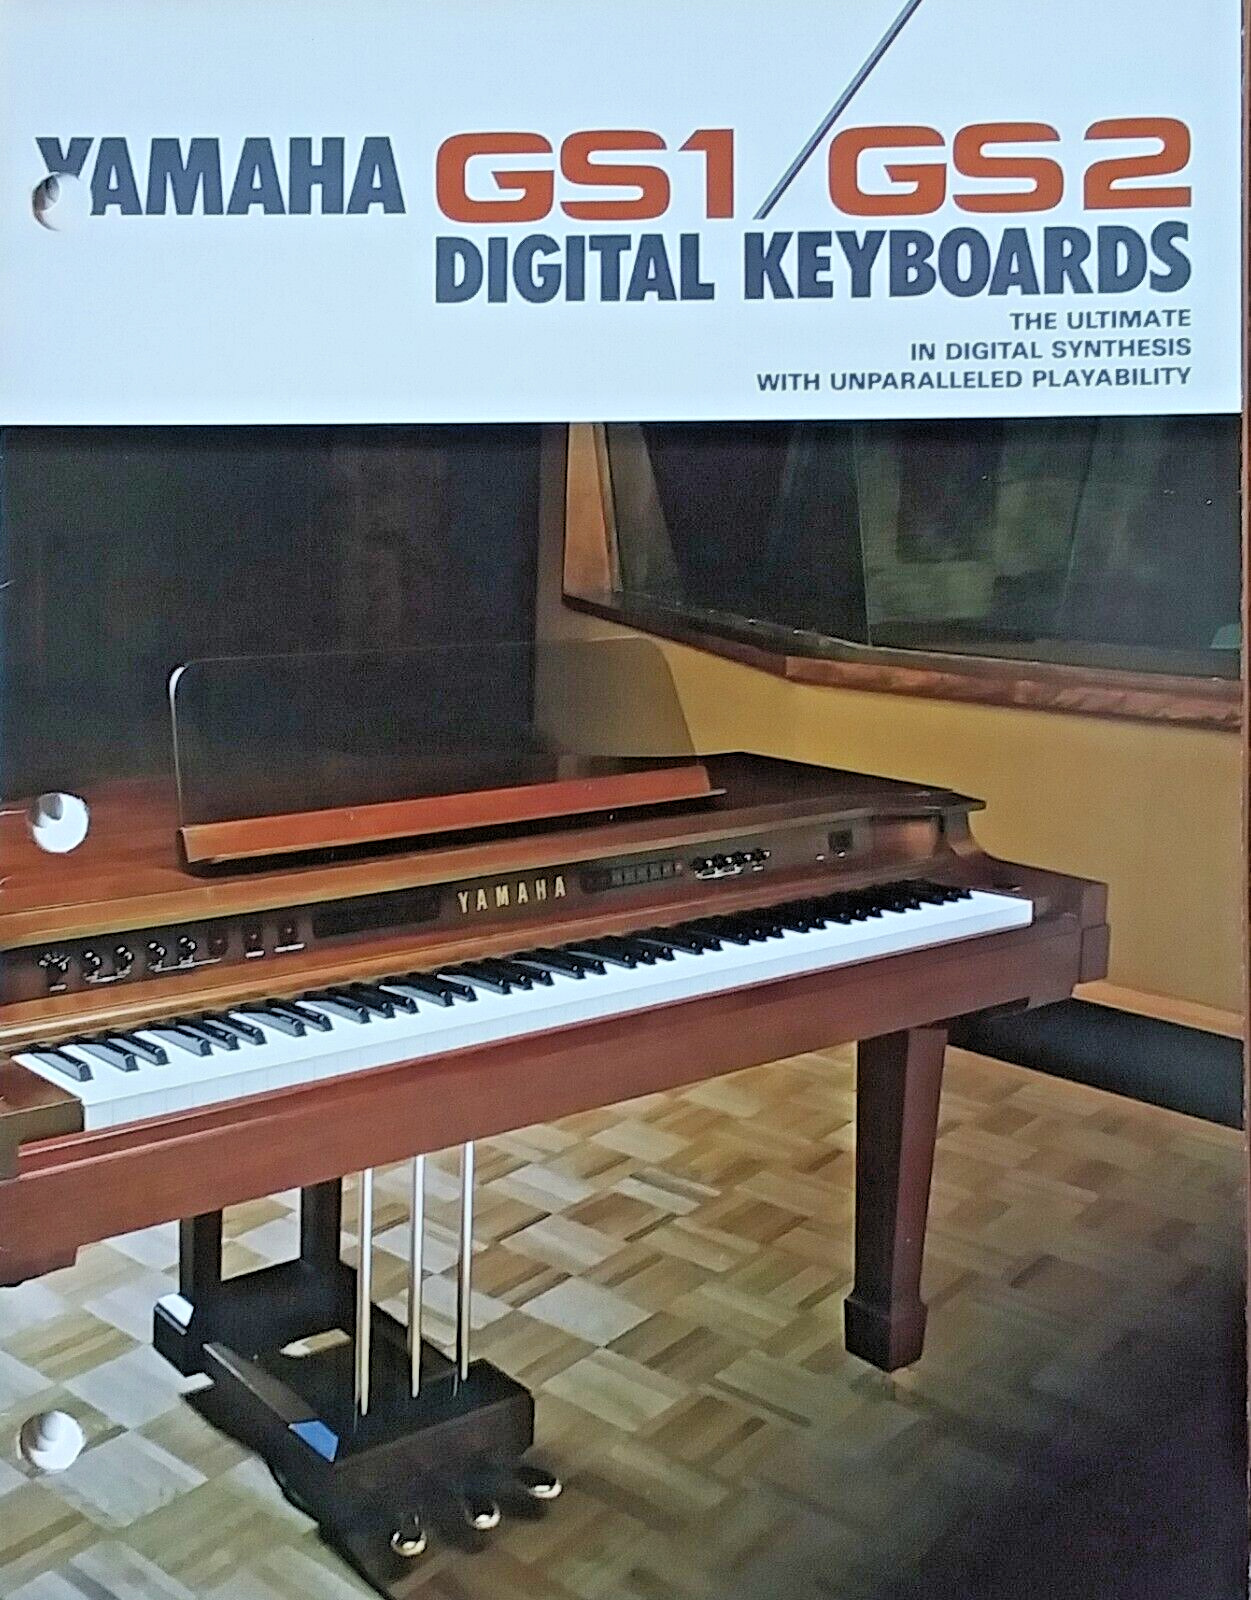 Yamaha GS1 GS2 FM Digital Keyboard Original Color Brochure, 8 Pages, Super Rare